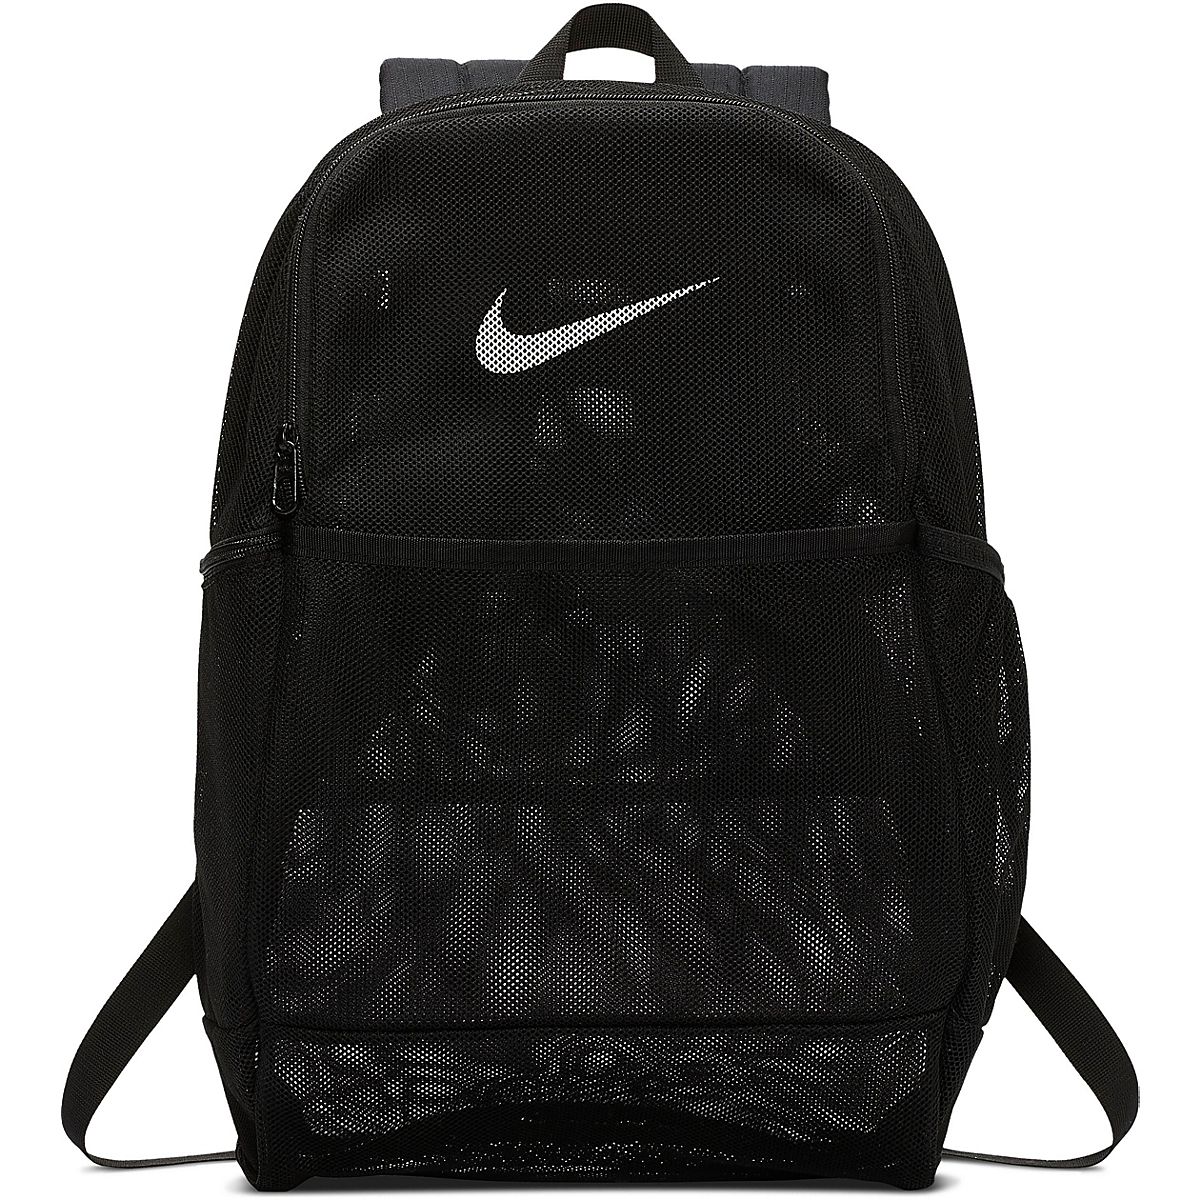 Niet ingewikkeld mogelijkheid verbinding verbroken Nike Brasilia Mesh 9.0 Training Backpack | Academy